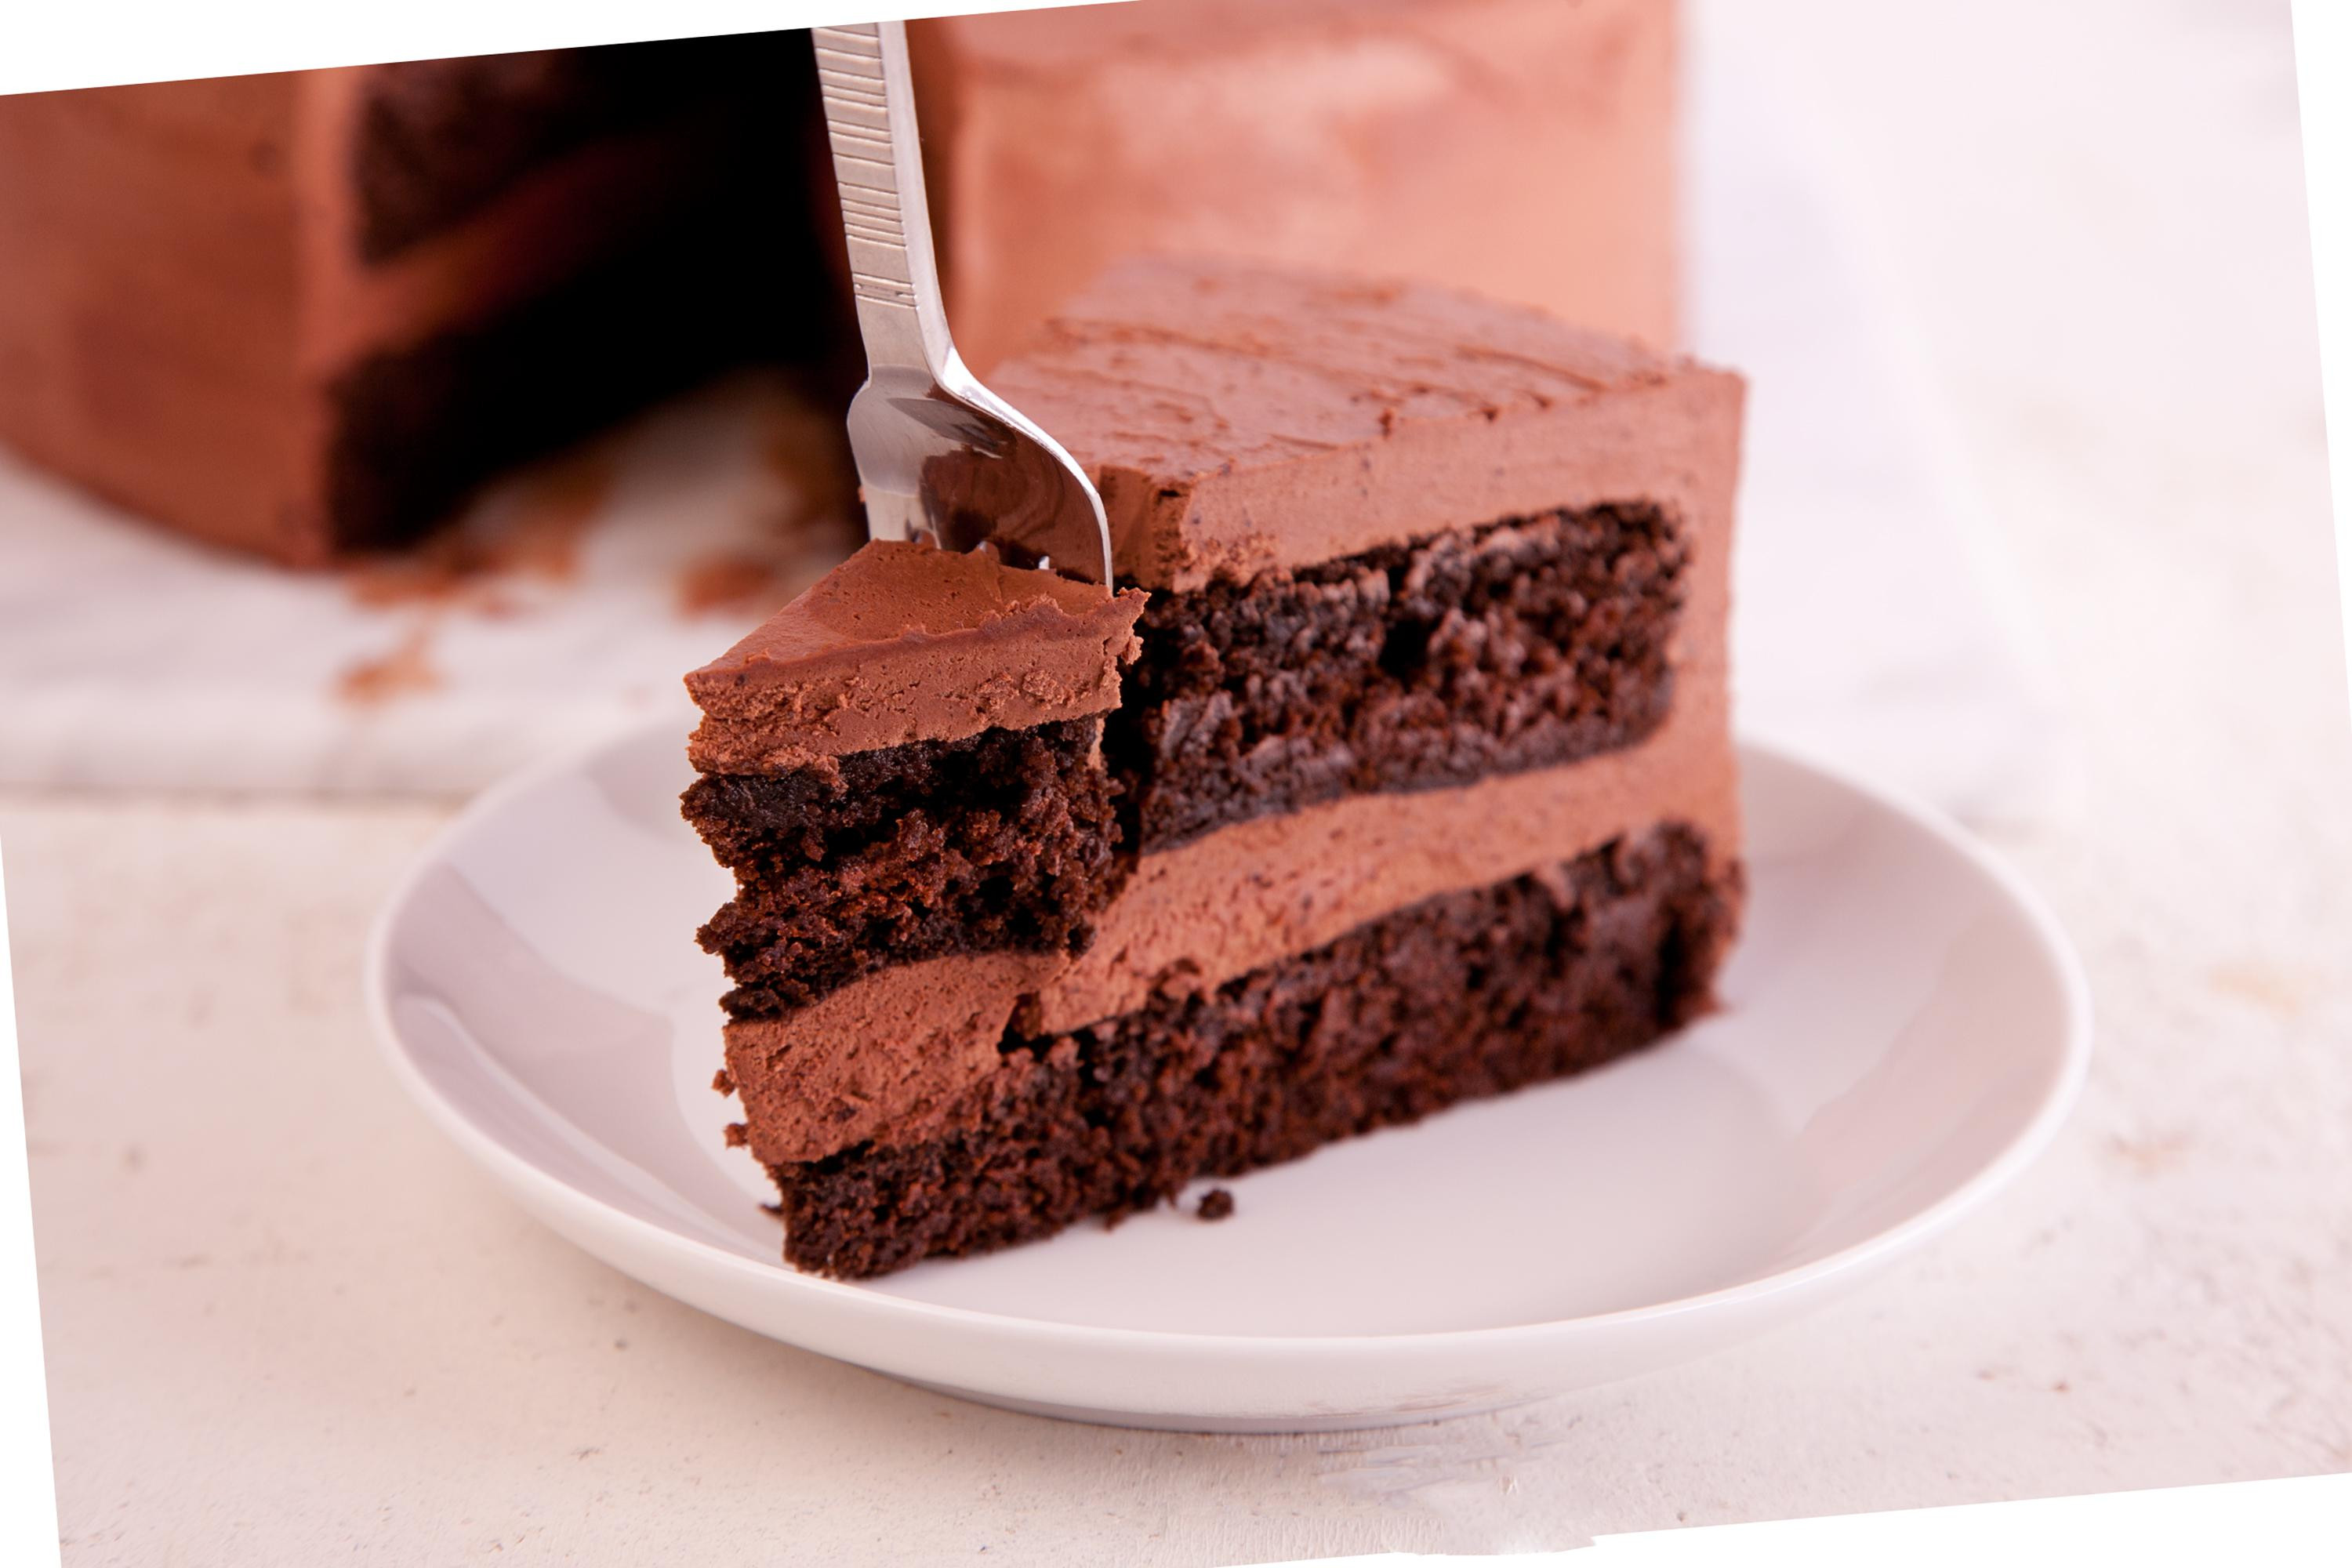 Best ideas about Chocolate Birthday Cake Recipe
. Save or Pin vegan chocolate cake Now.